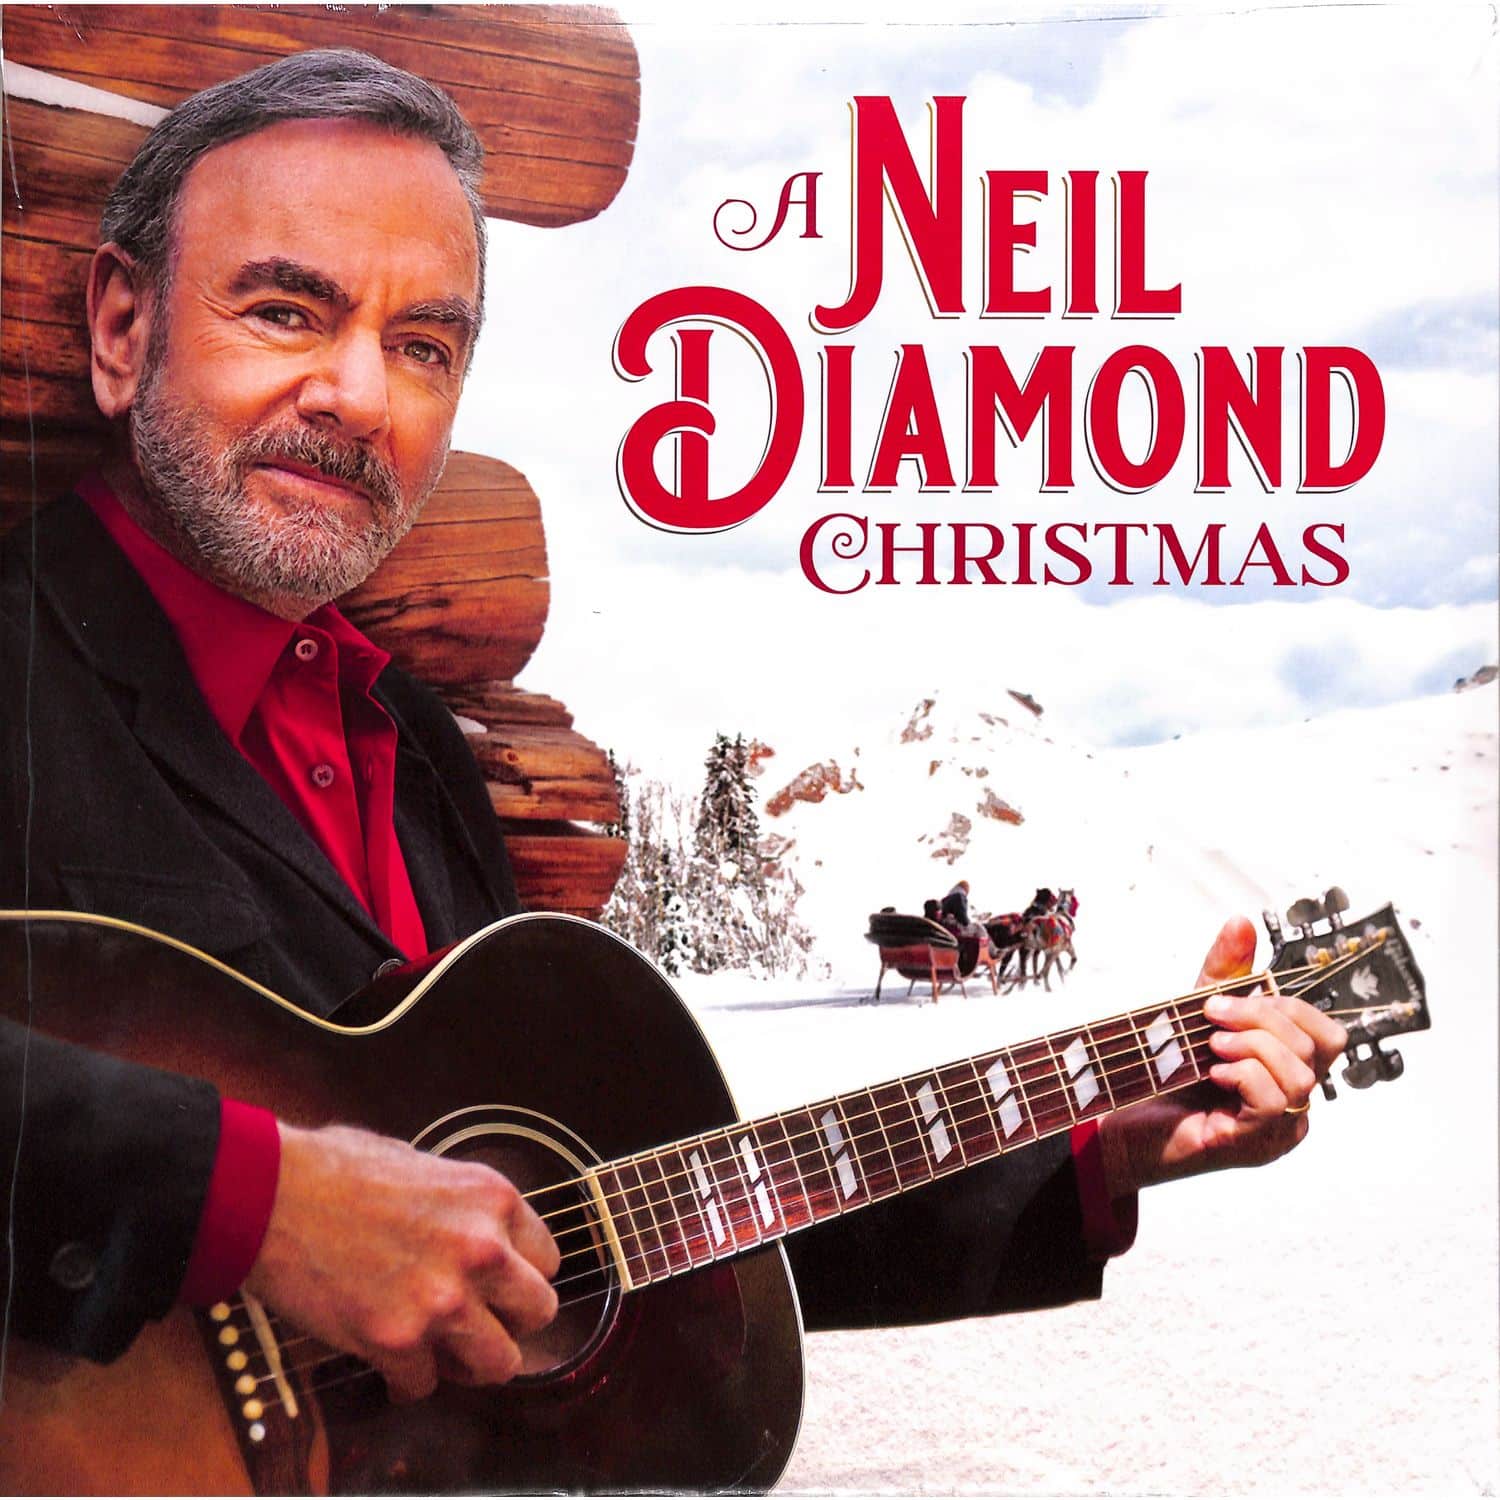 Neil Diamond - A NEIL DIAMOND CHRISTMAS 